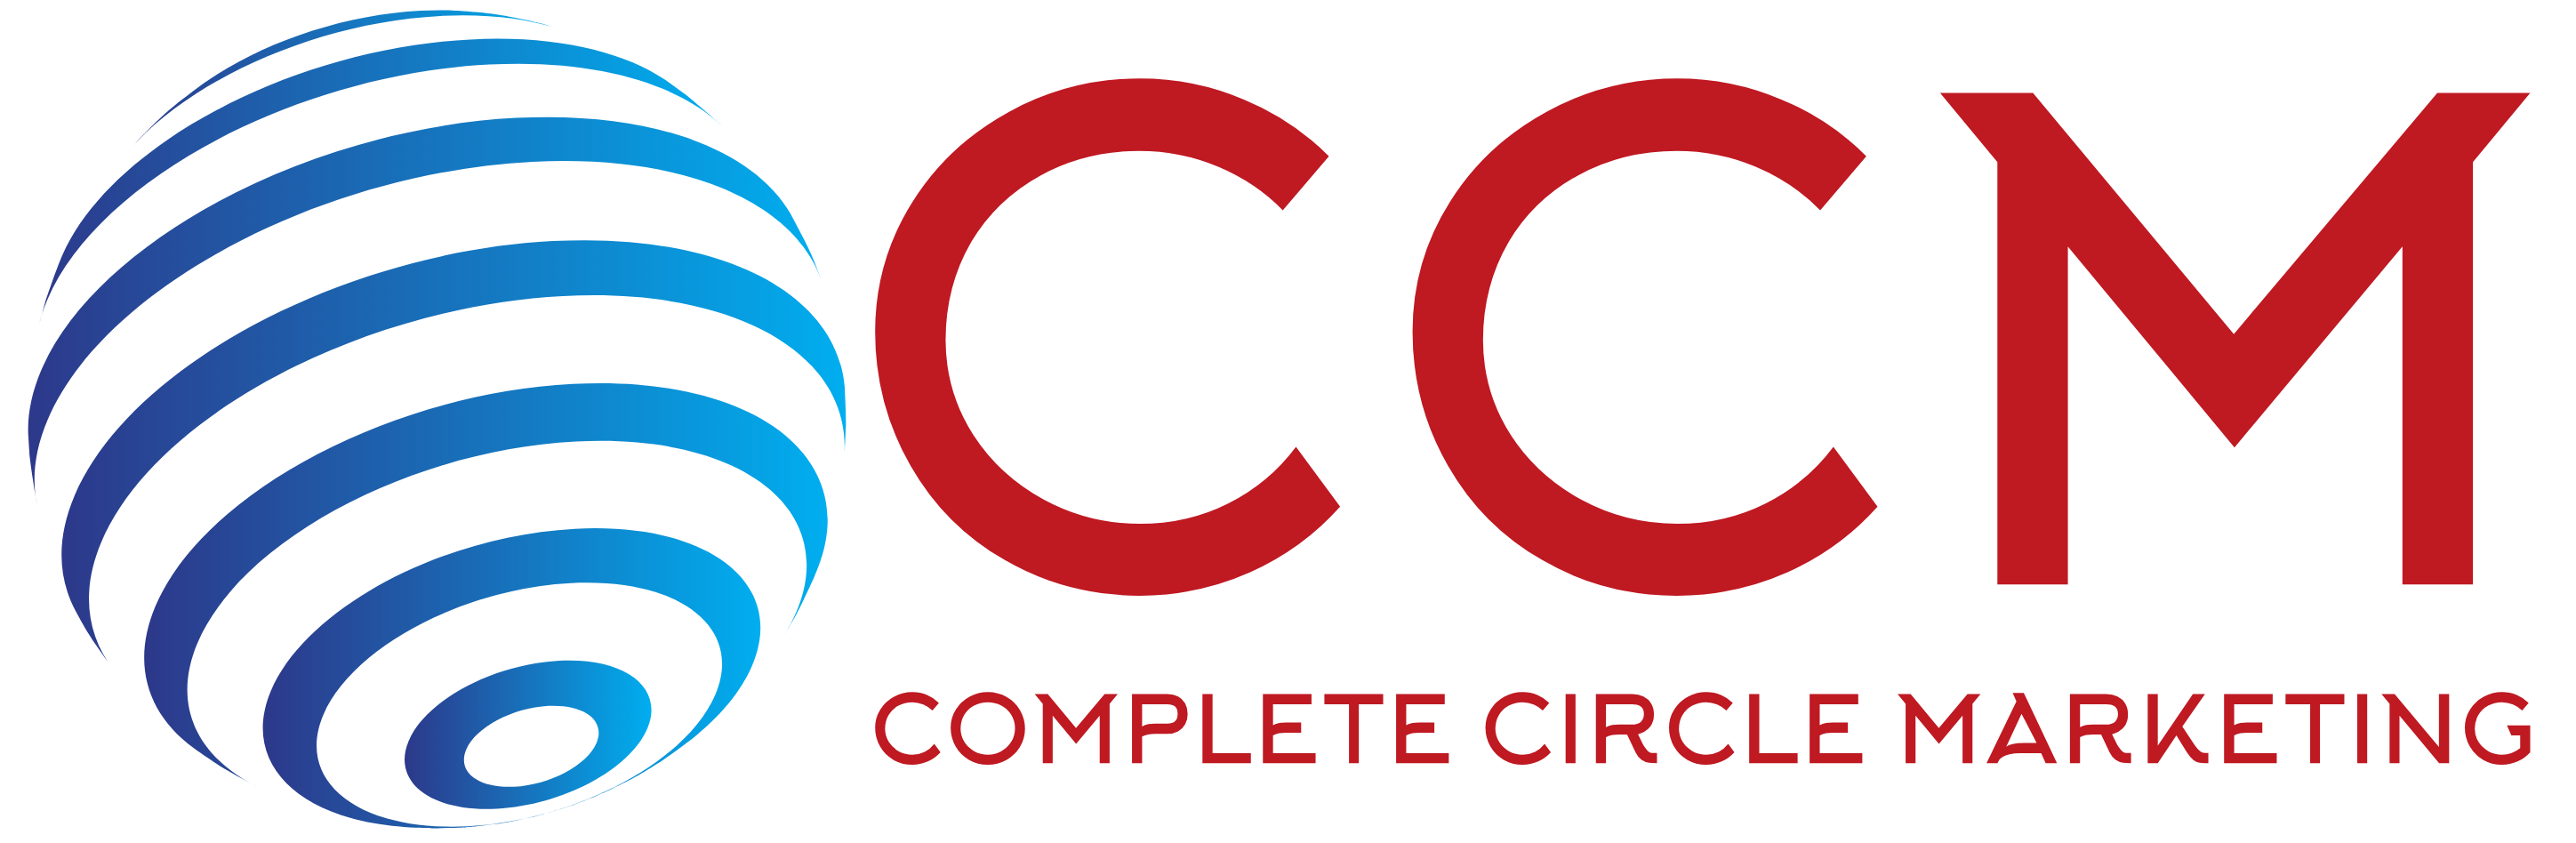 CCM-Complete Circle Marketing LLC's Logo